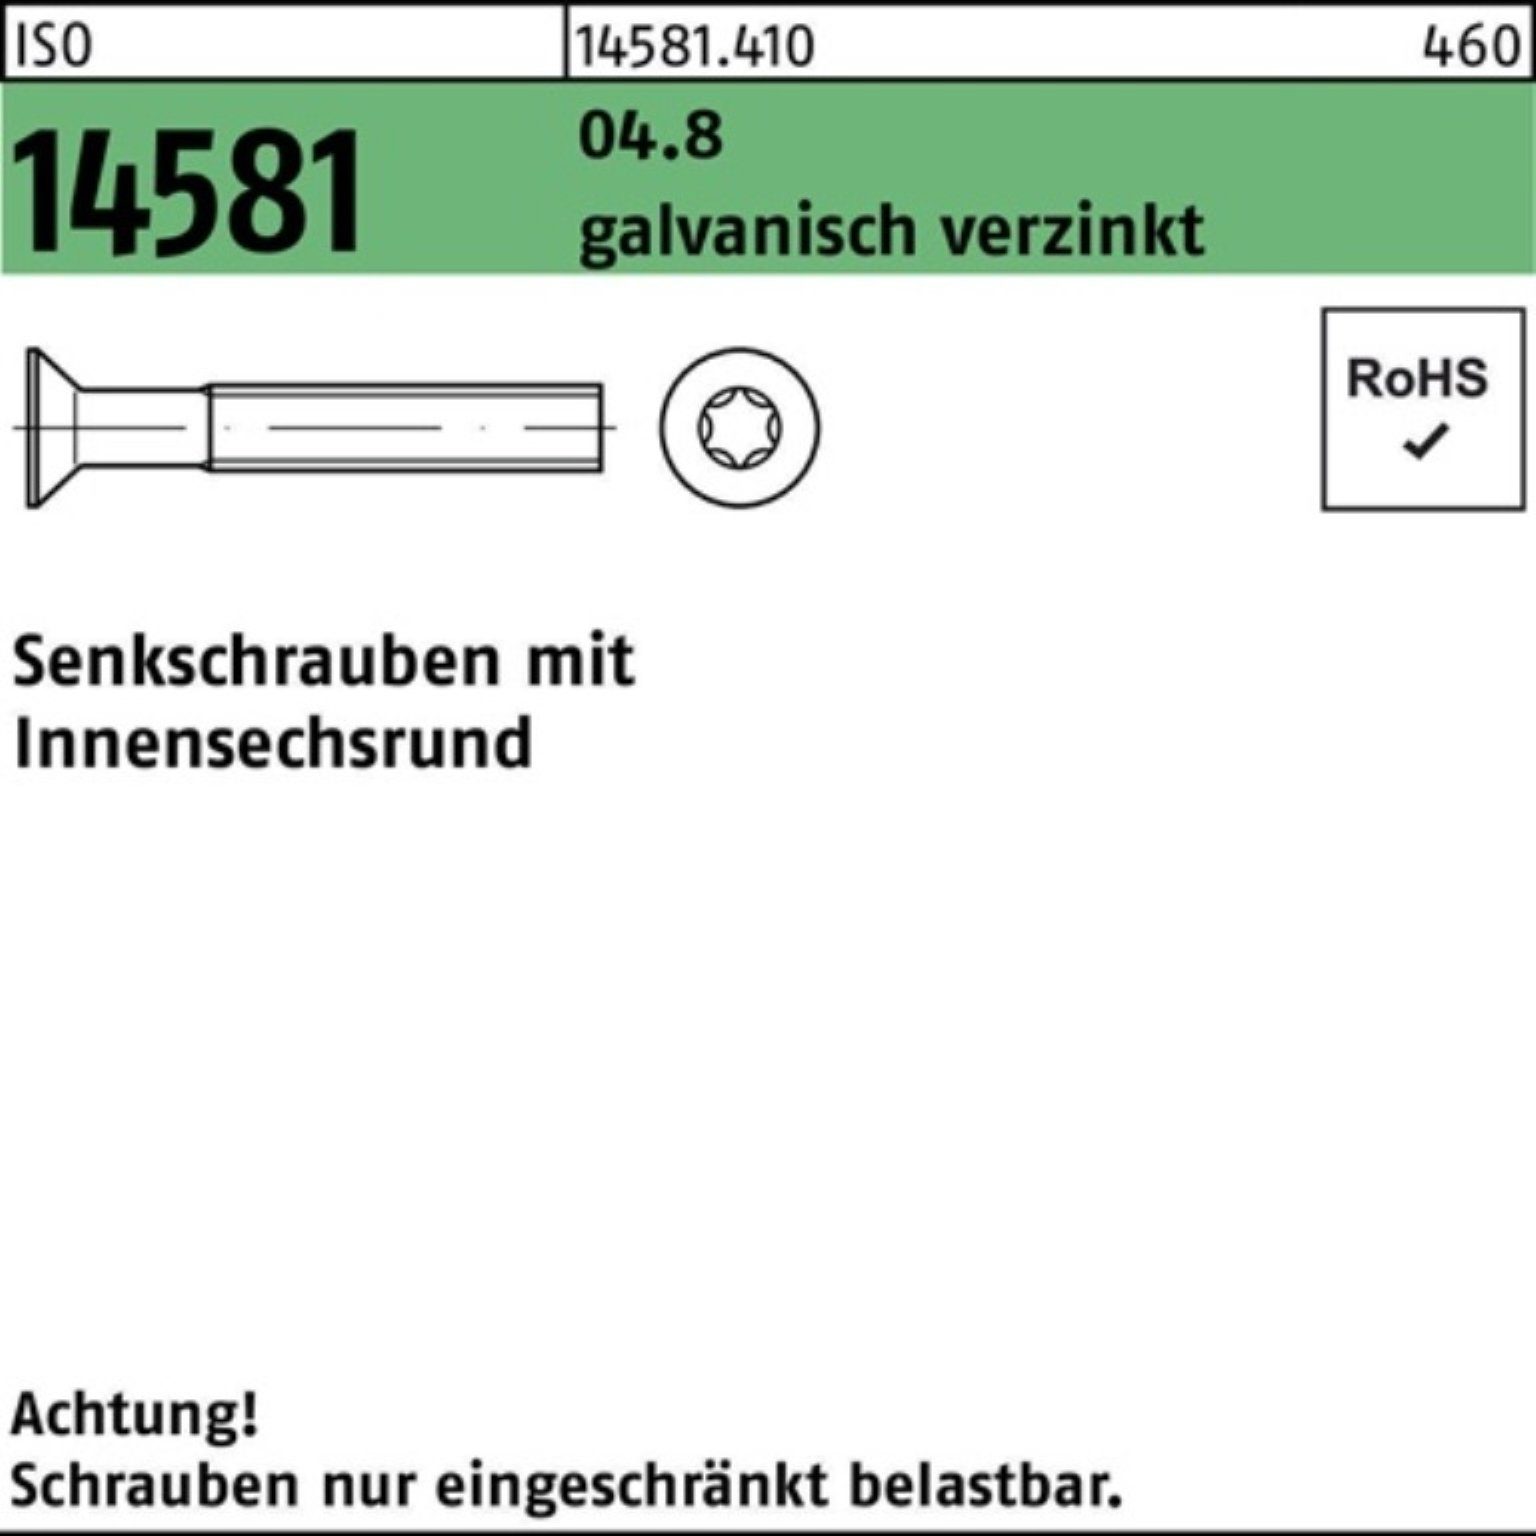 galv.verz. Senkschraube Reyher 14581 Pack ISR 1000er ISO M4x35 T20 Senkschraube 04.8 1000S